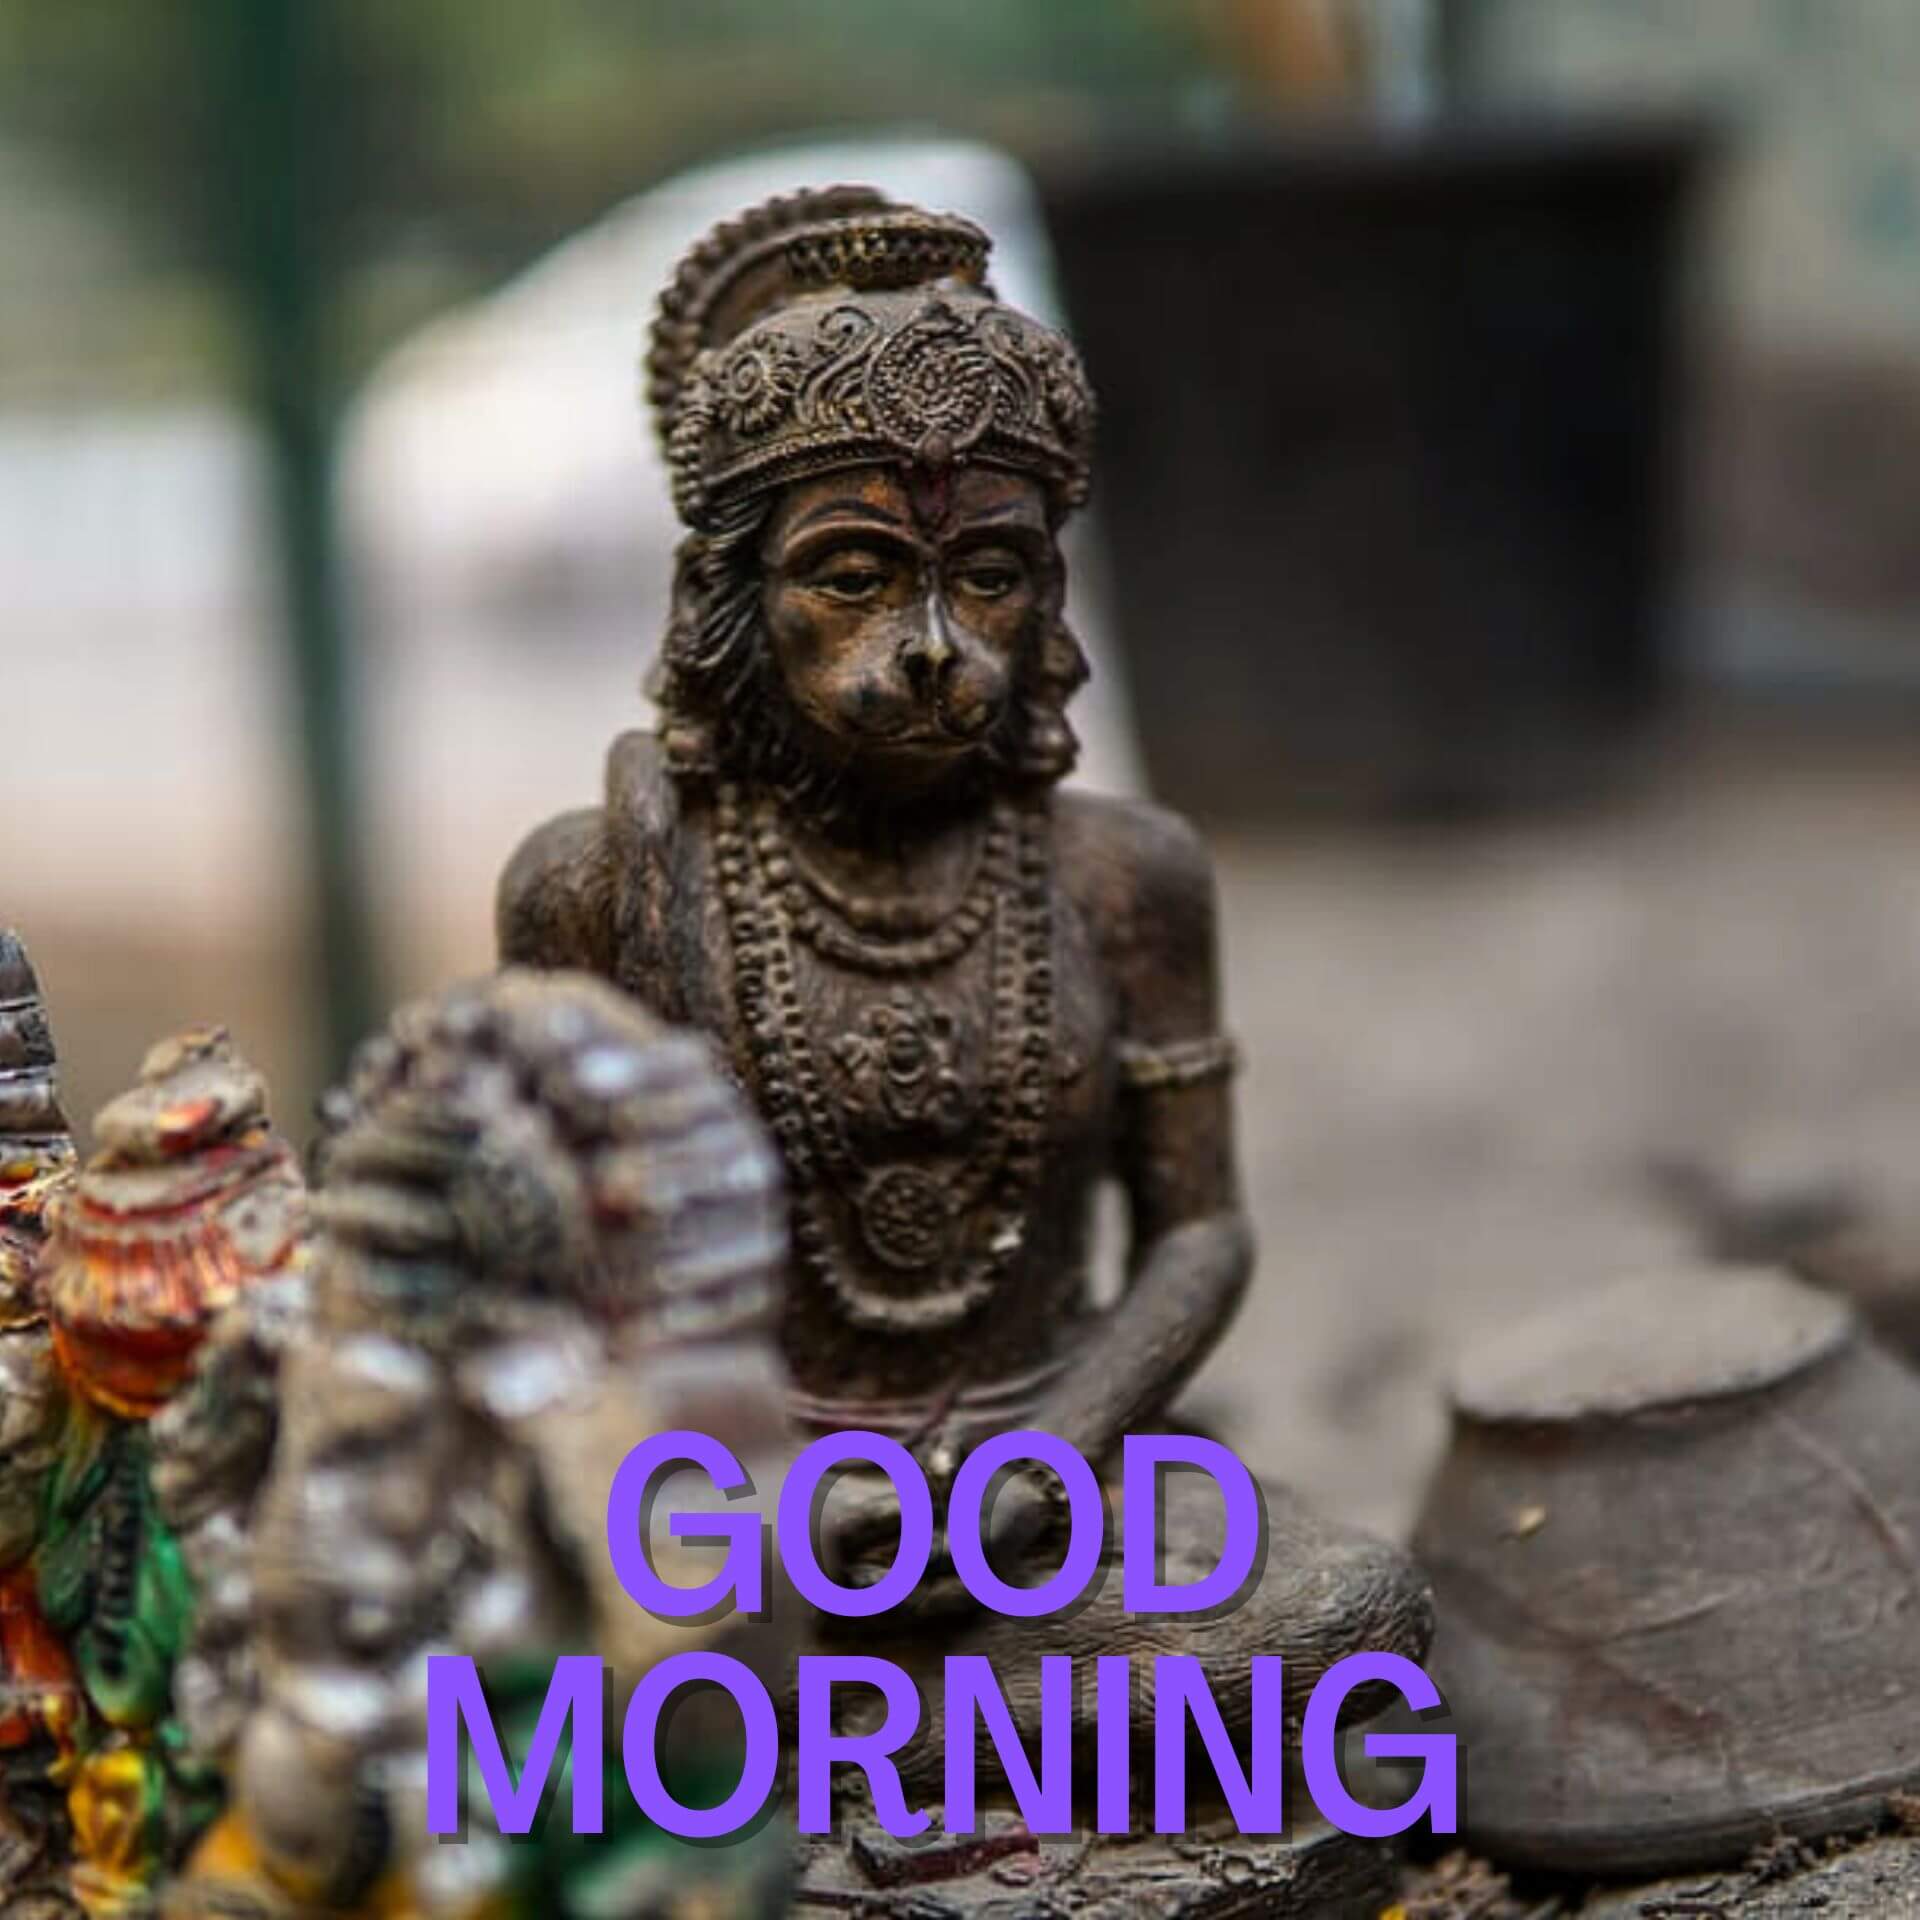 hanuman ji good morning Wallpaper for Facebook Whatsapp